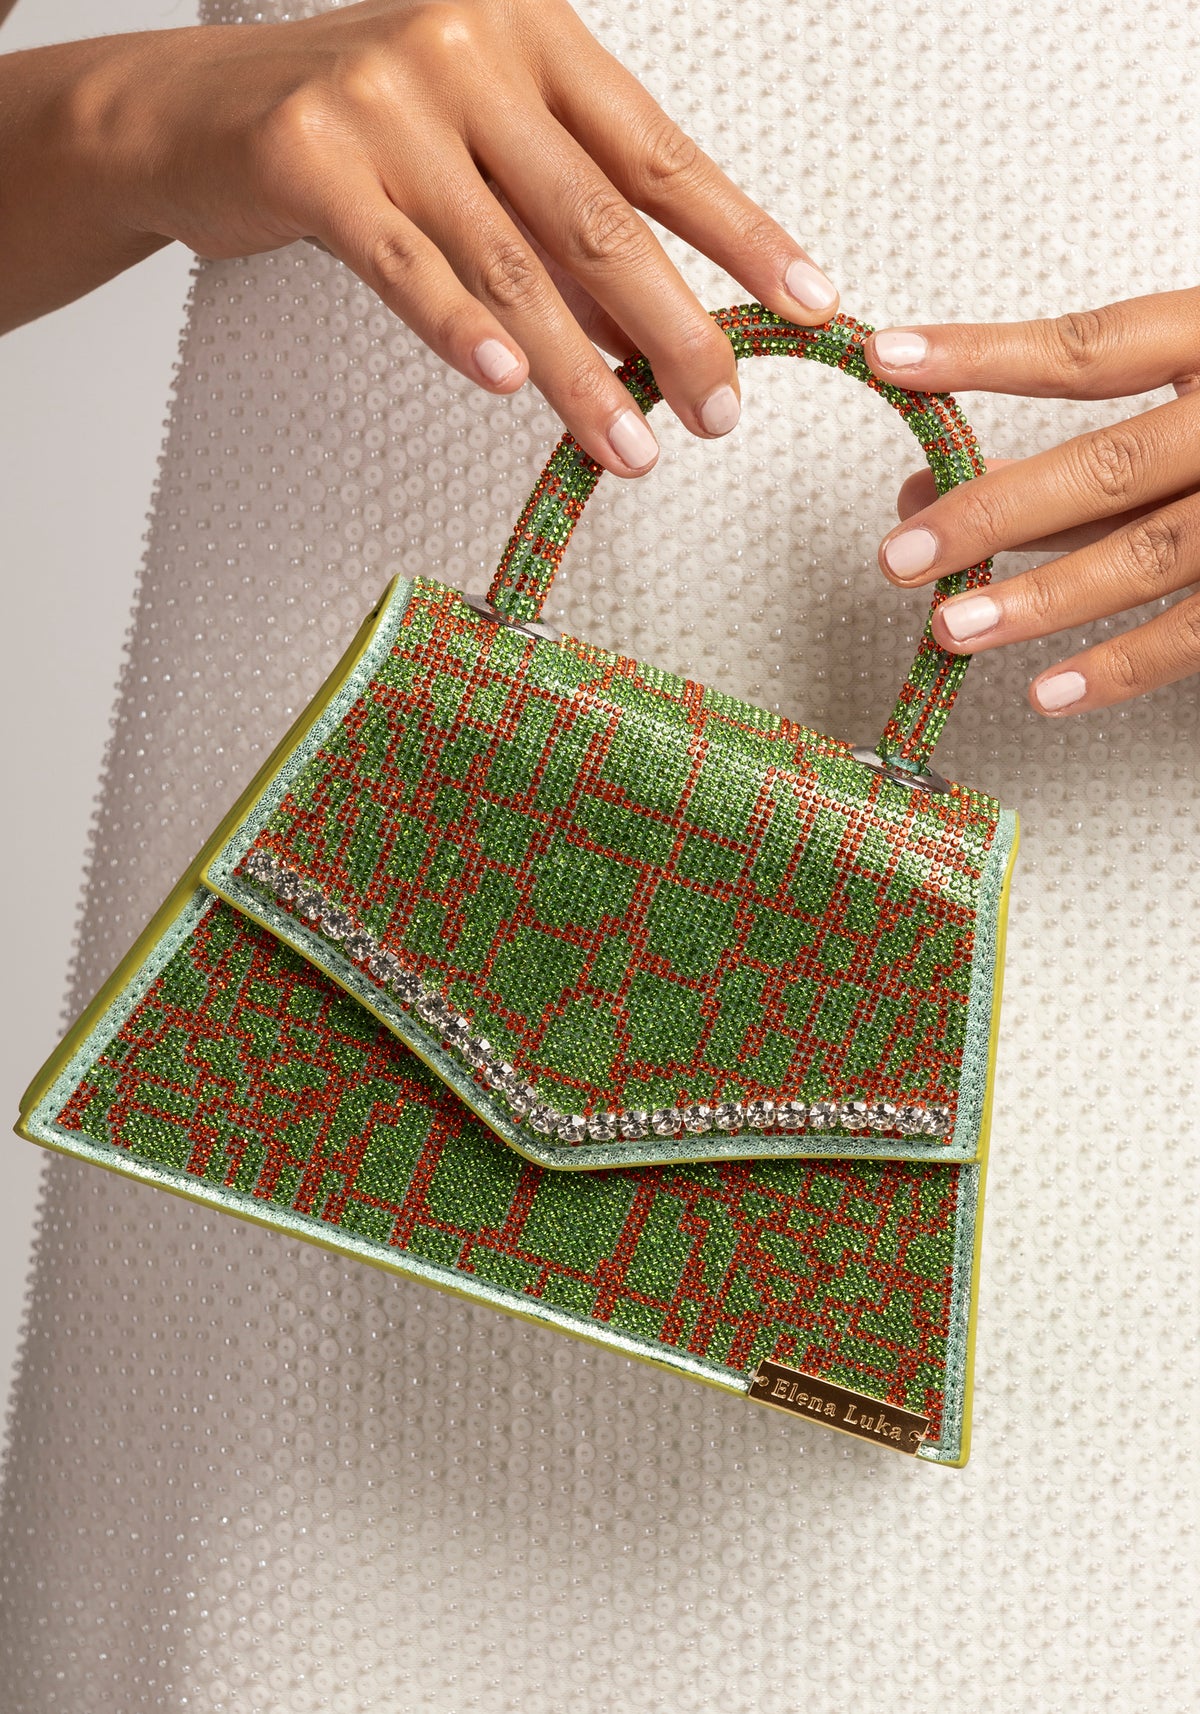 Ornate green gemstone bag